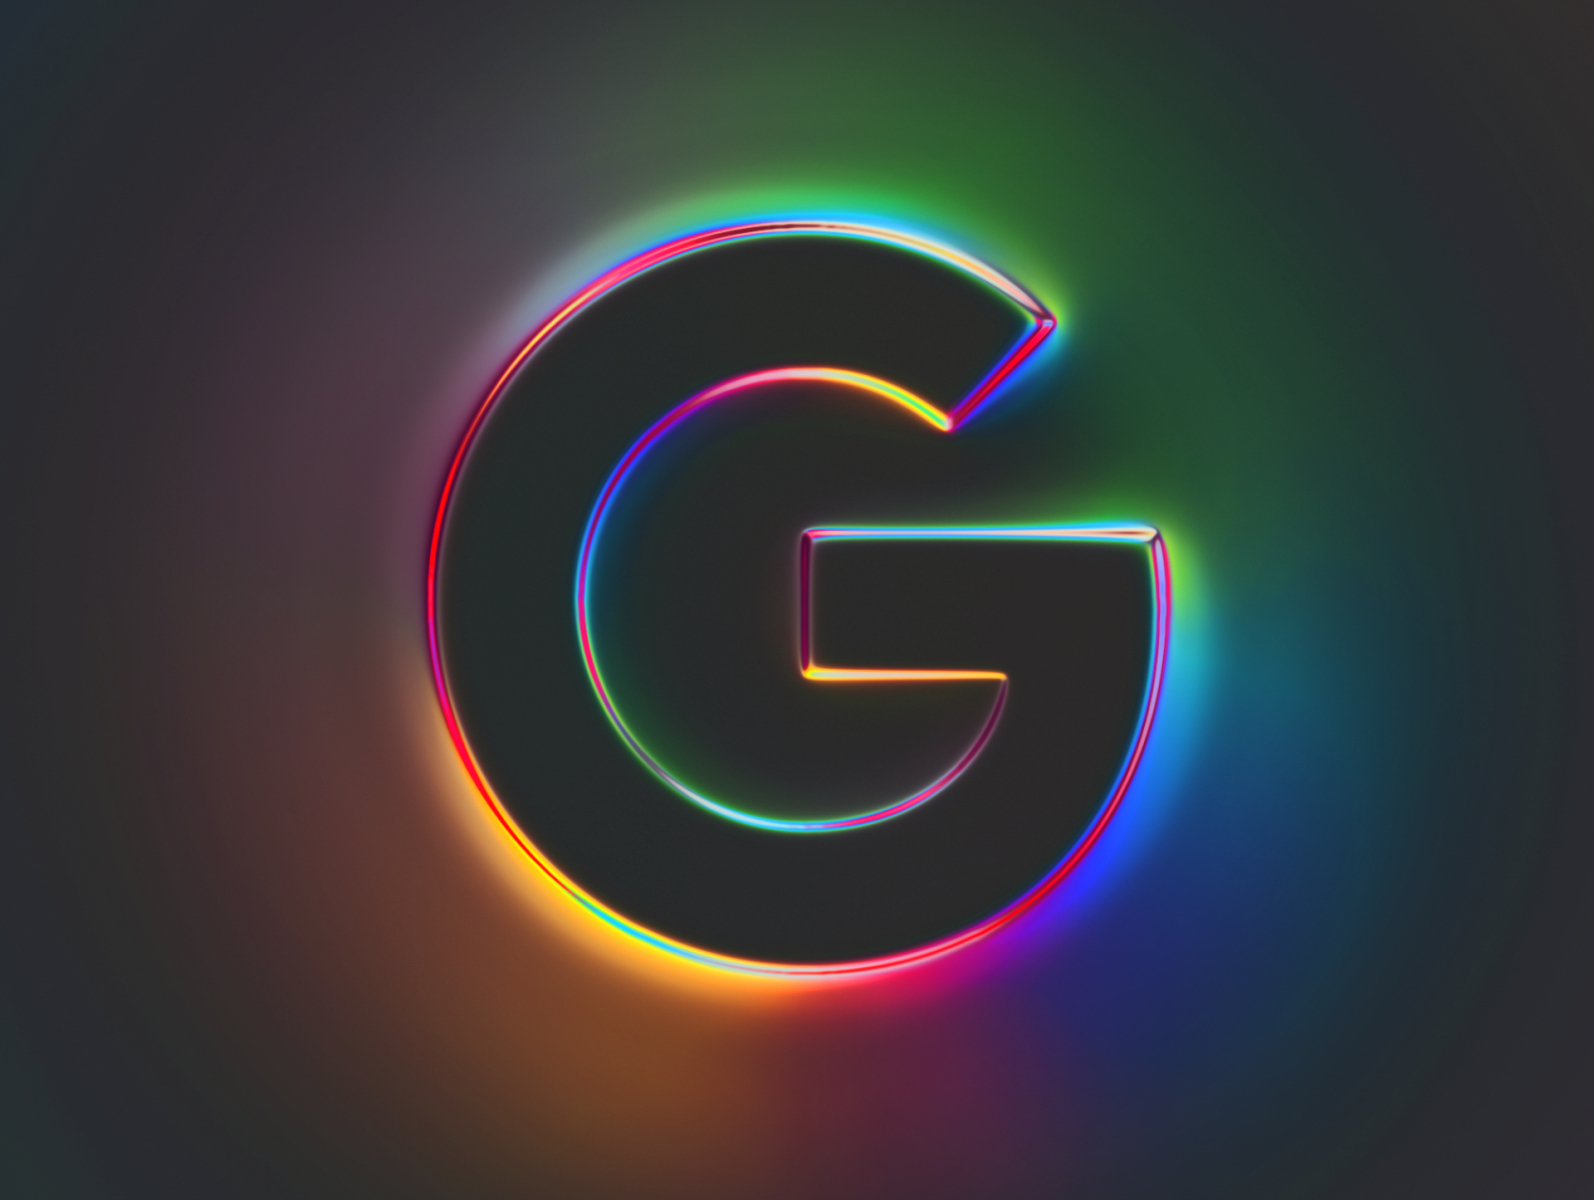 36 logos - Google rebranding rebrand google logotype logo design logo branding 36daysoftype typography illustration colors generative filter forge abstract art design